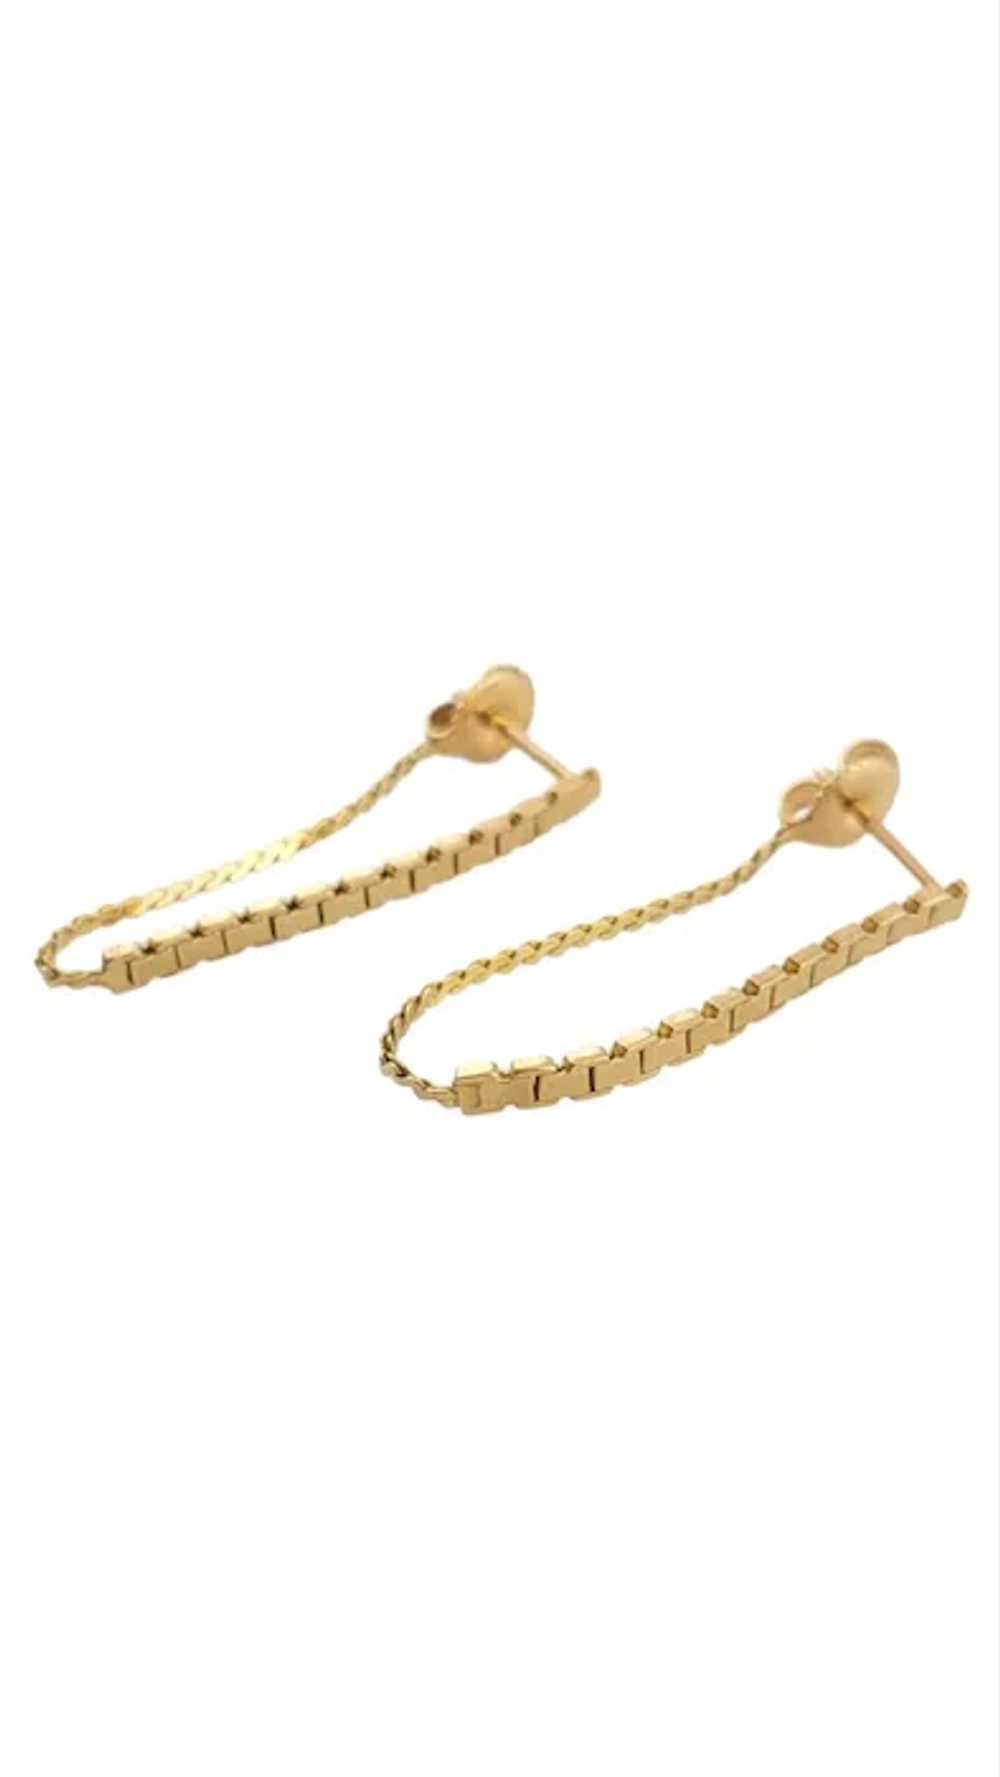 Vintage 10K Yellow Gold Chain Dangle Earrings - image 2